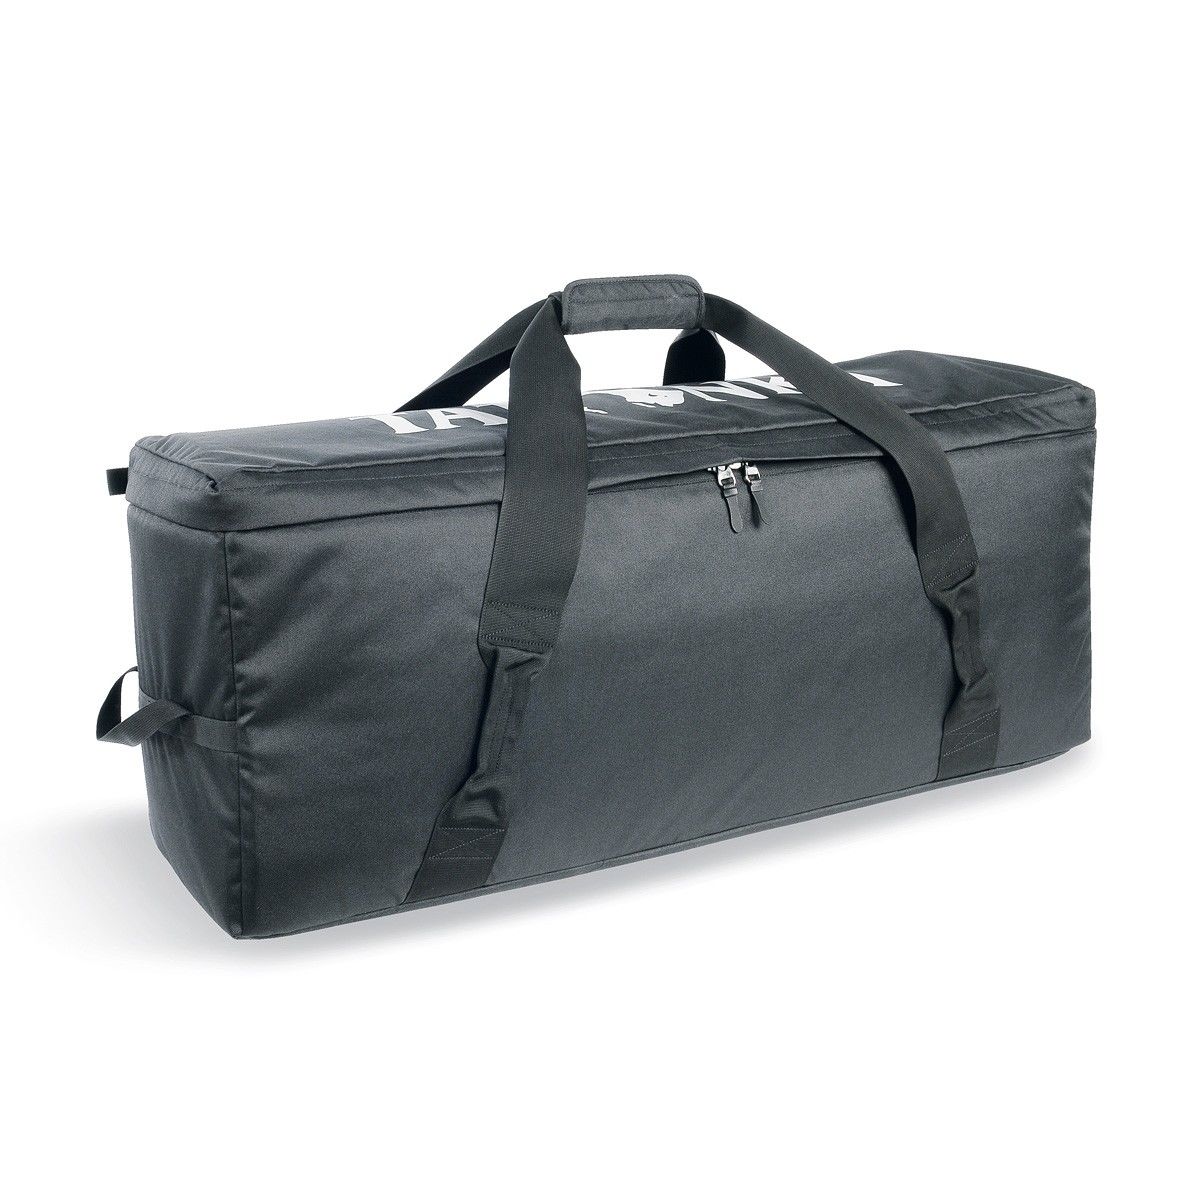 Tatonka Gear Bag 100 Schwarz- Reisetaschen- Grsse 100l - Farbe Black unter Tatonka